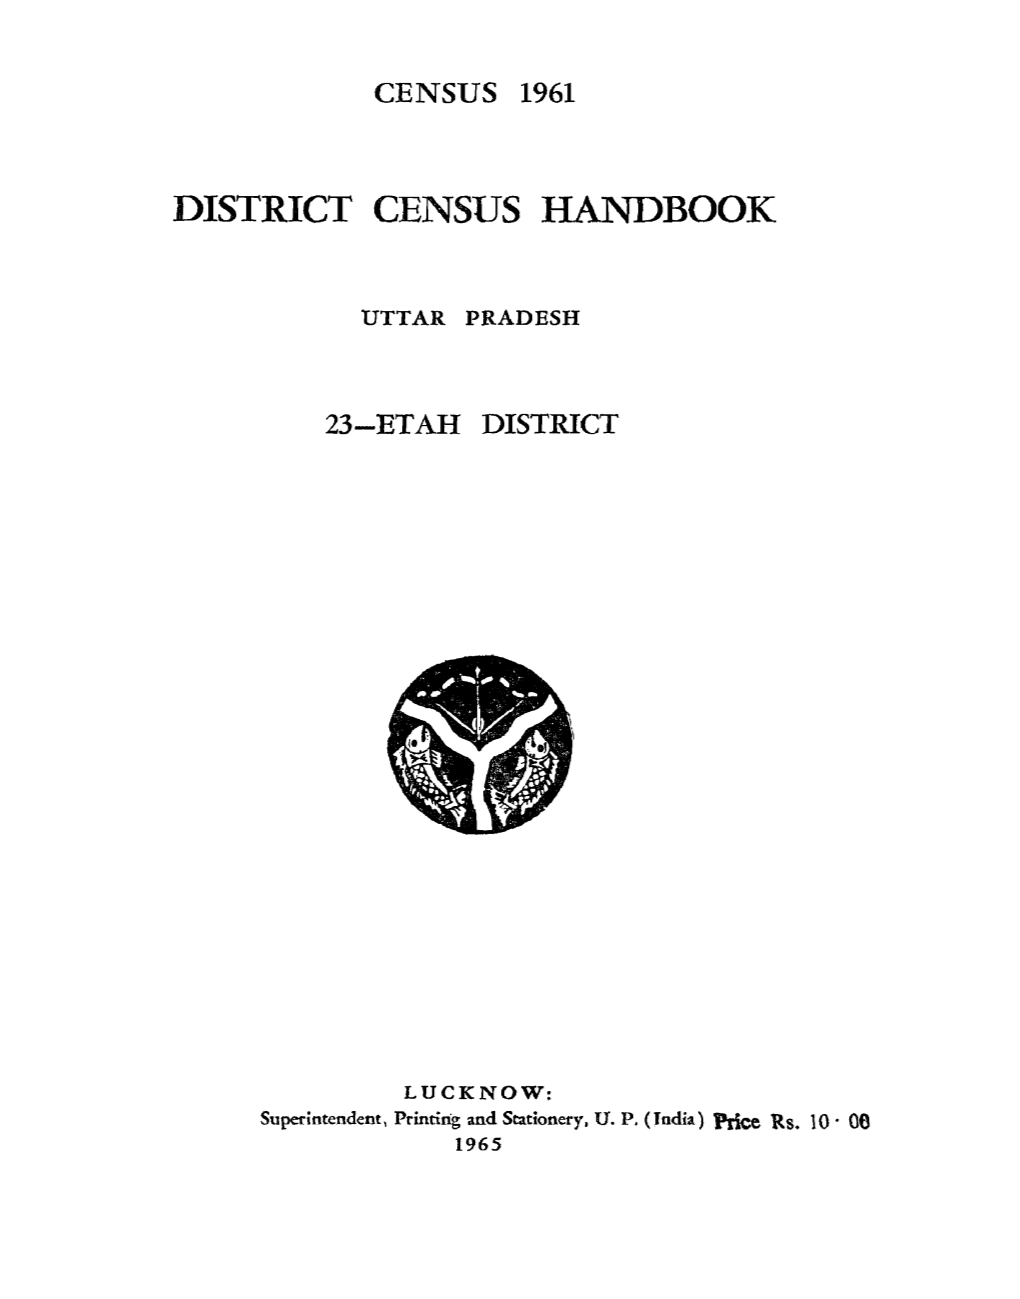 District Census Handbook, 23-Etah, Uttar Pradesh